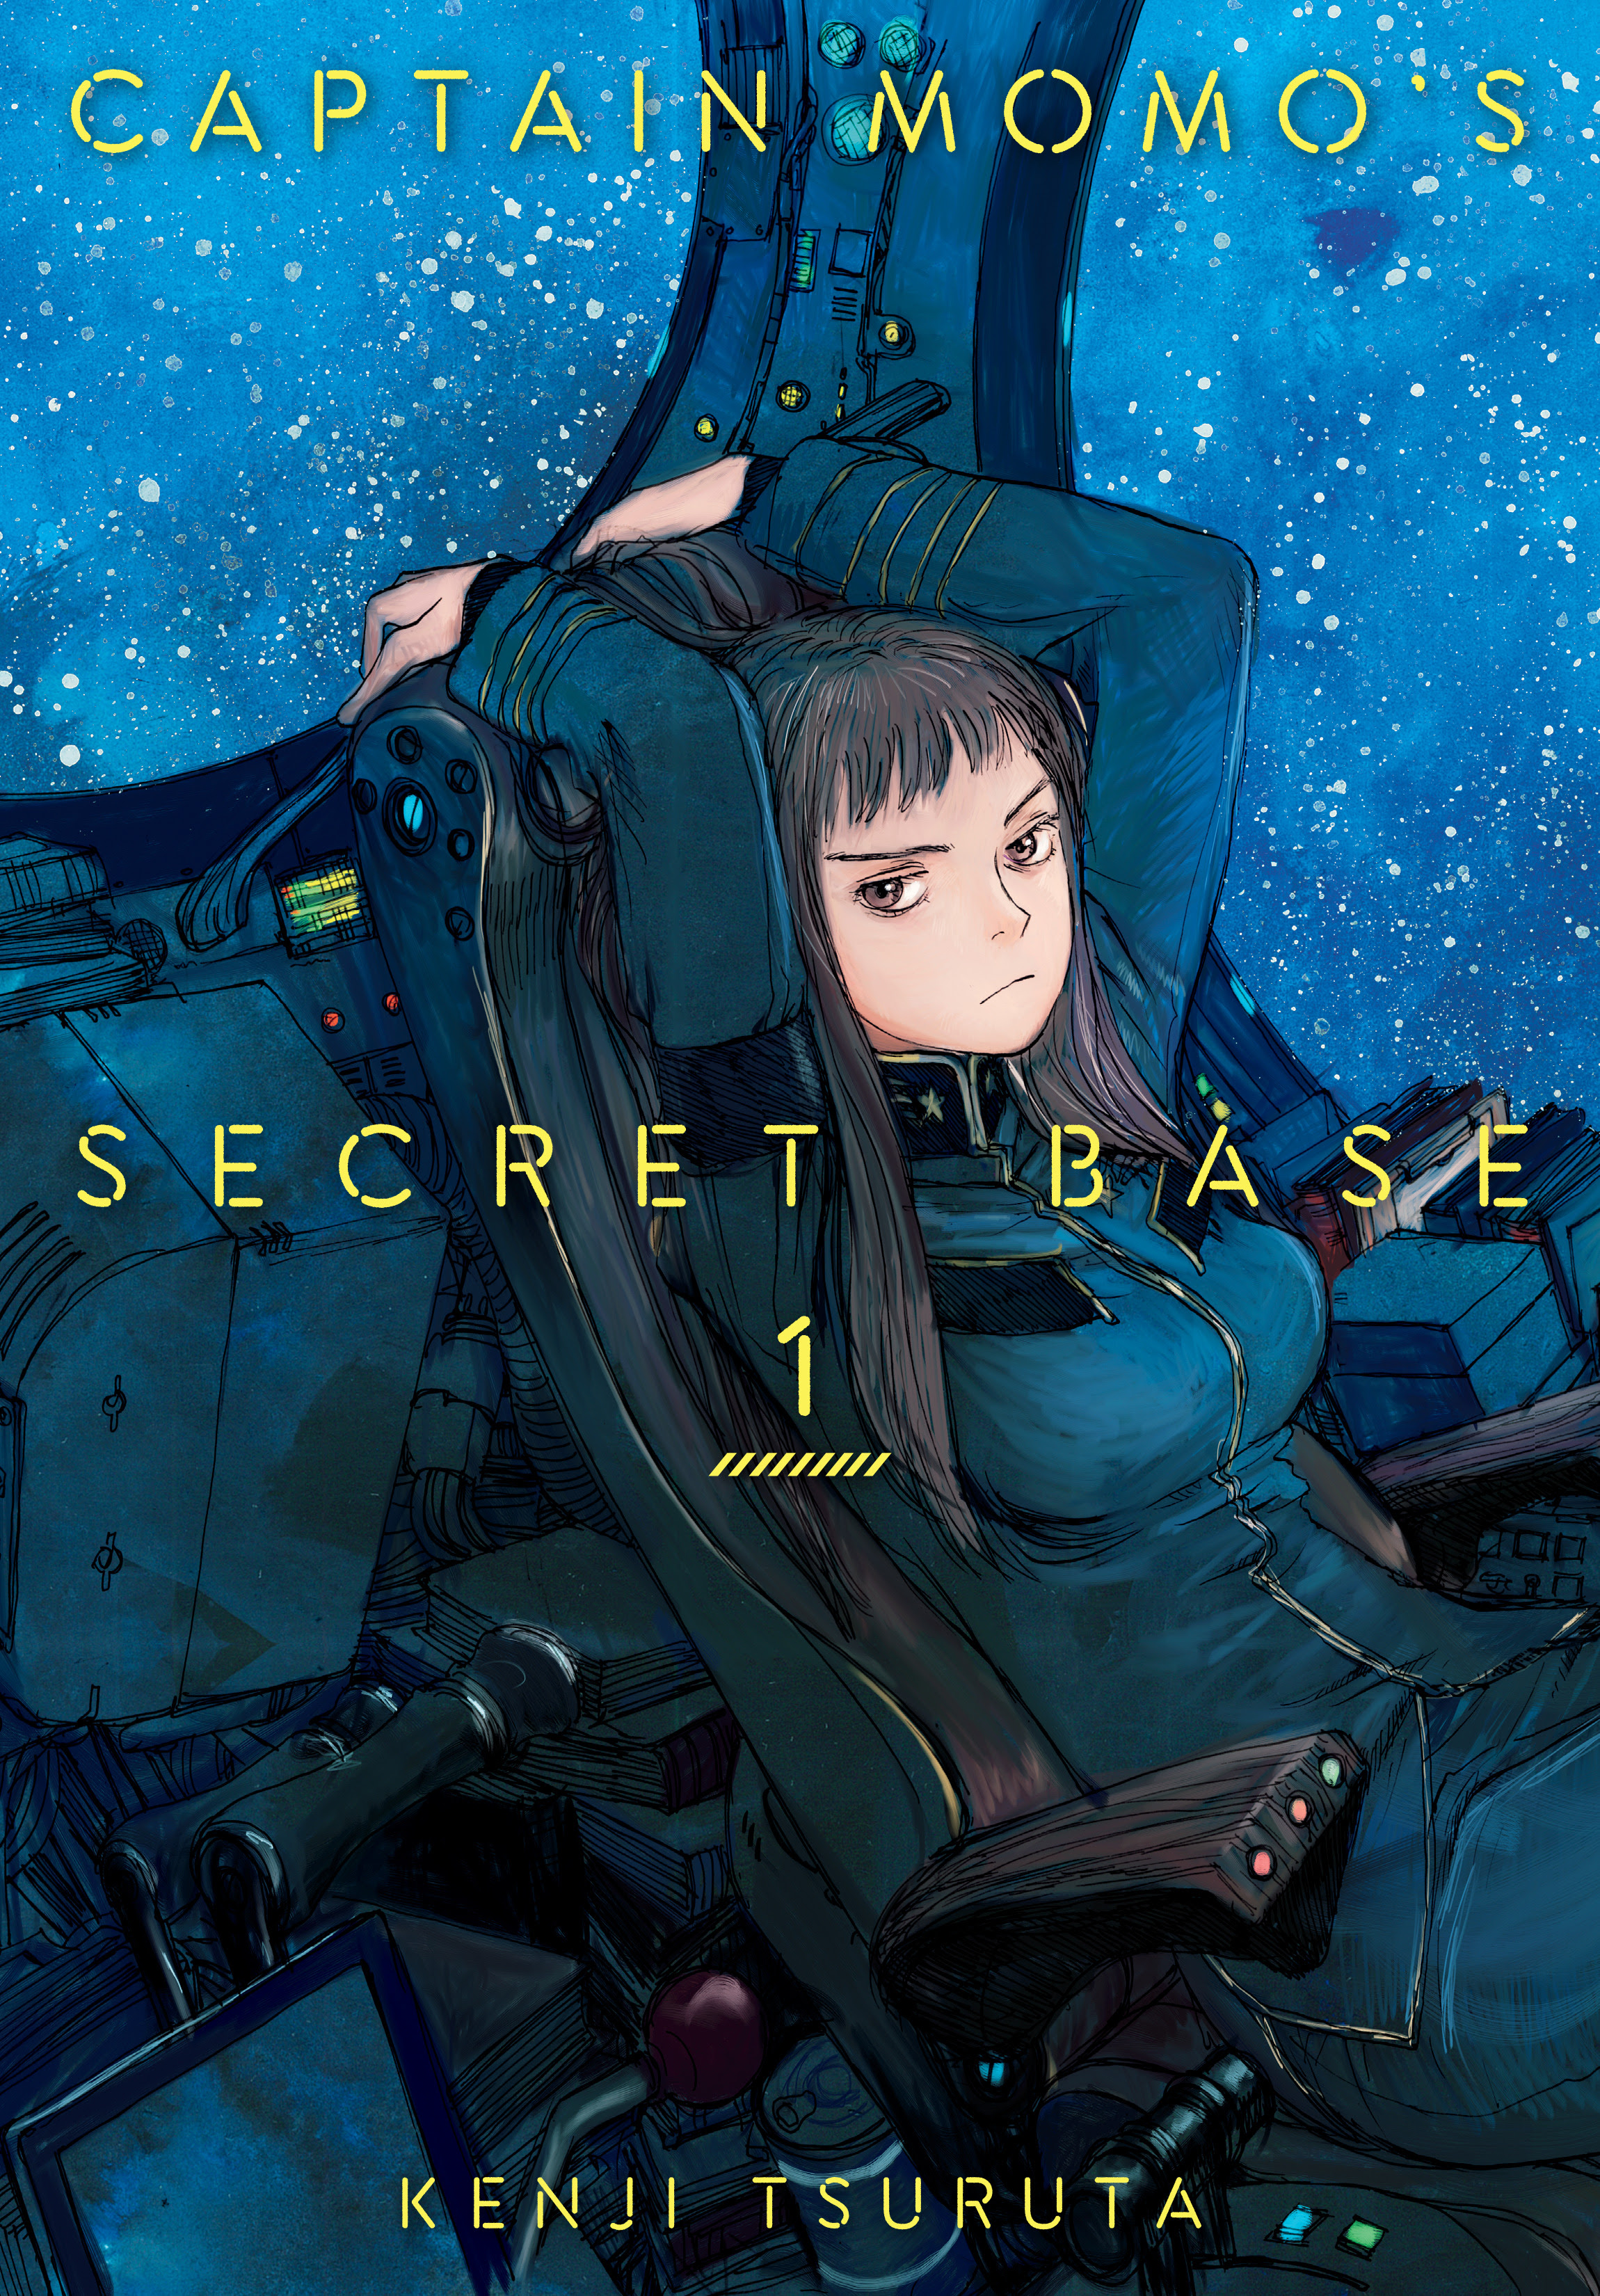 Captain Momo's Secret Base 1 Cover